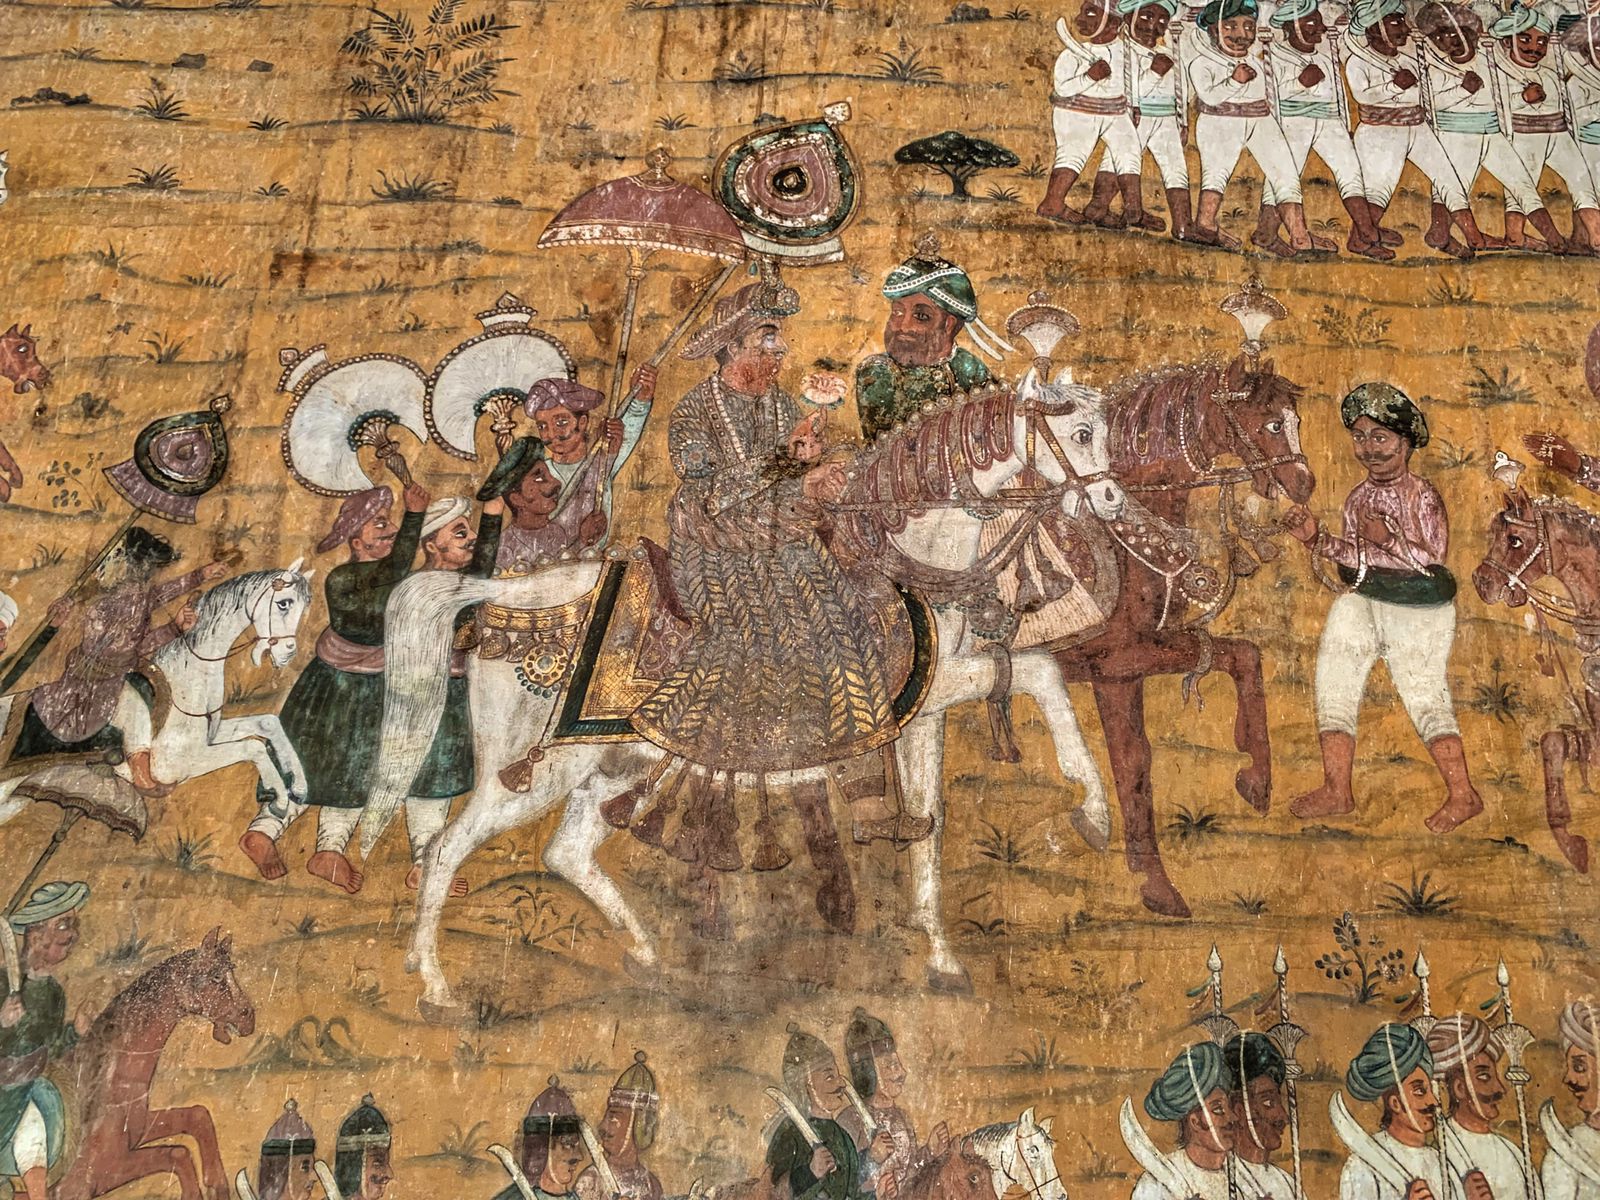 Tipu Sultan's painting at Tipu Sultan Summer Palace